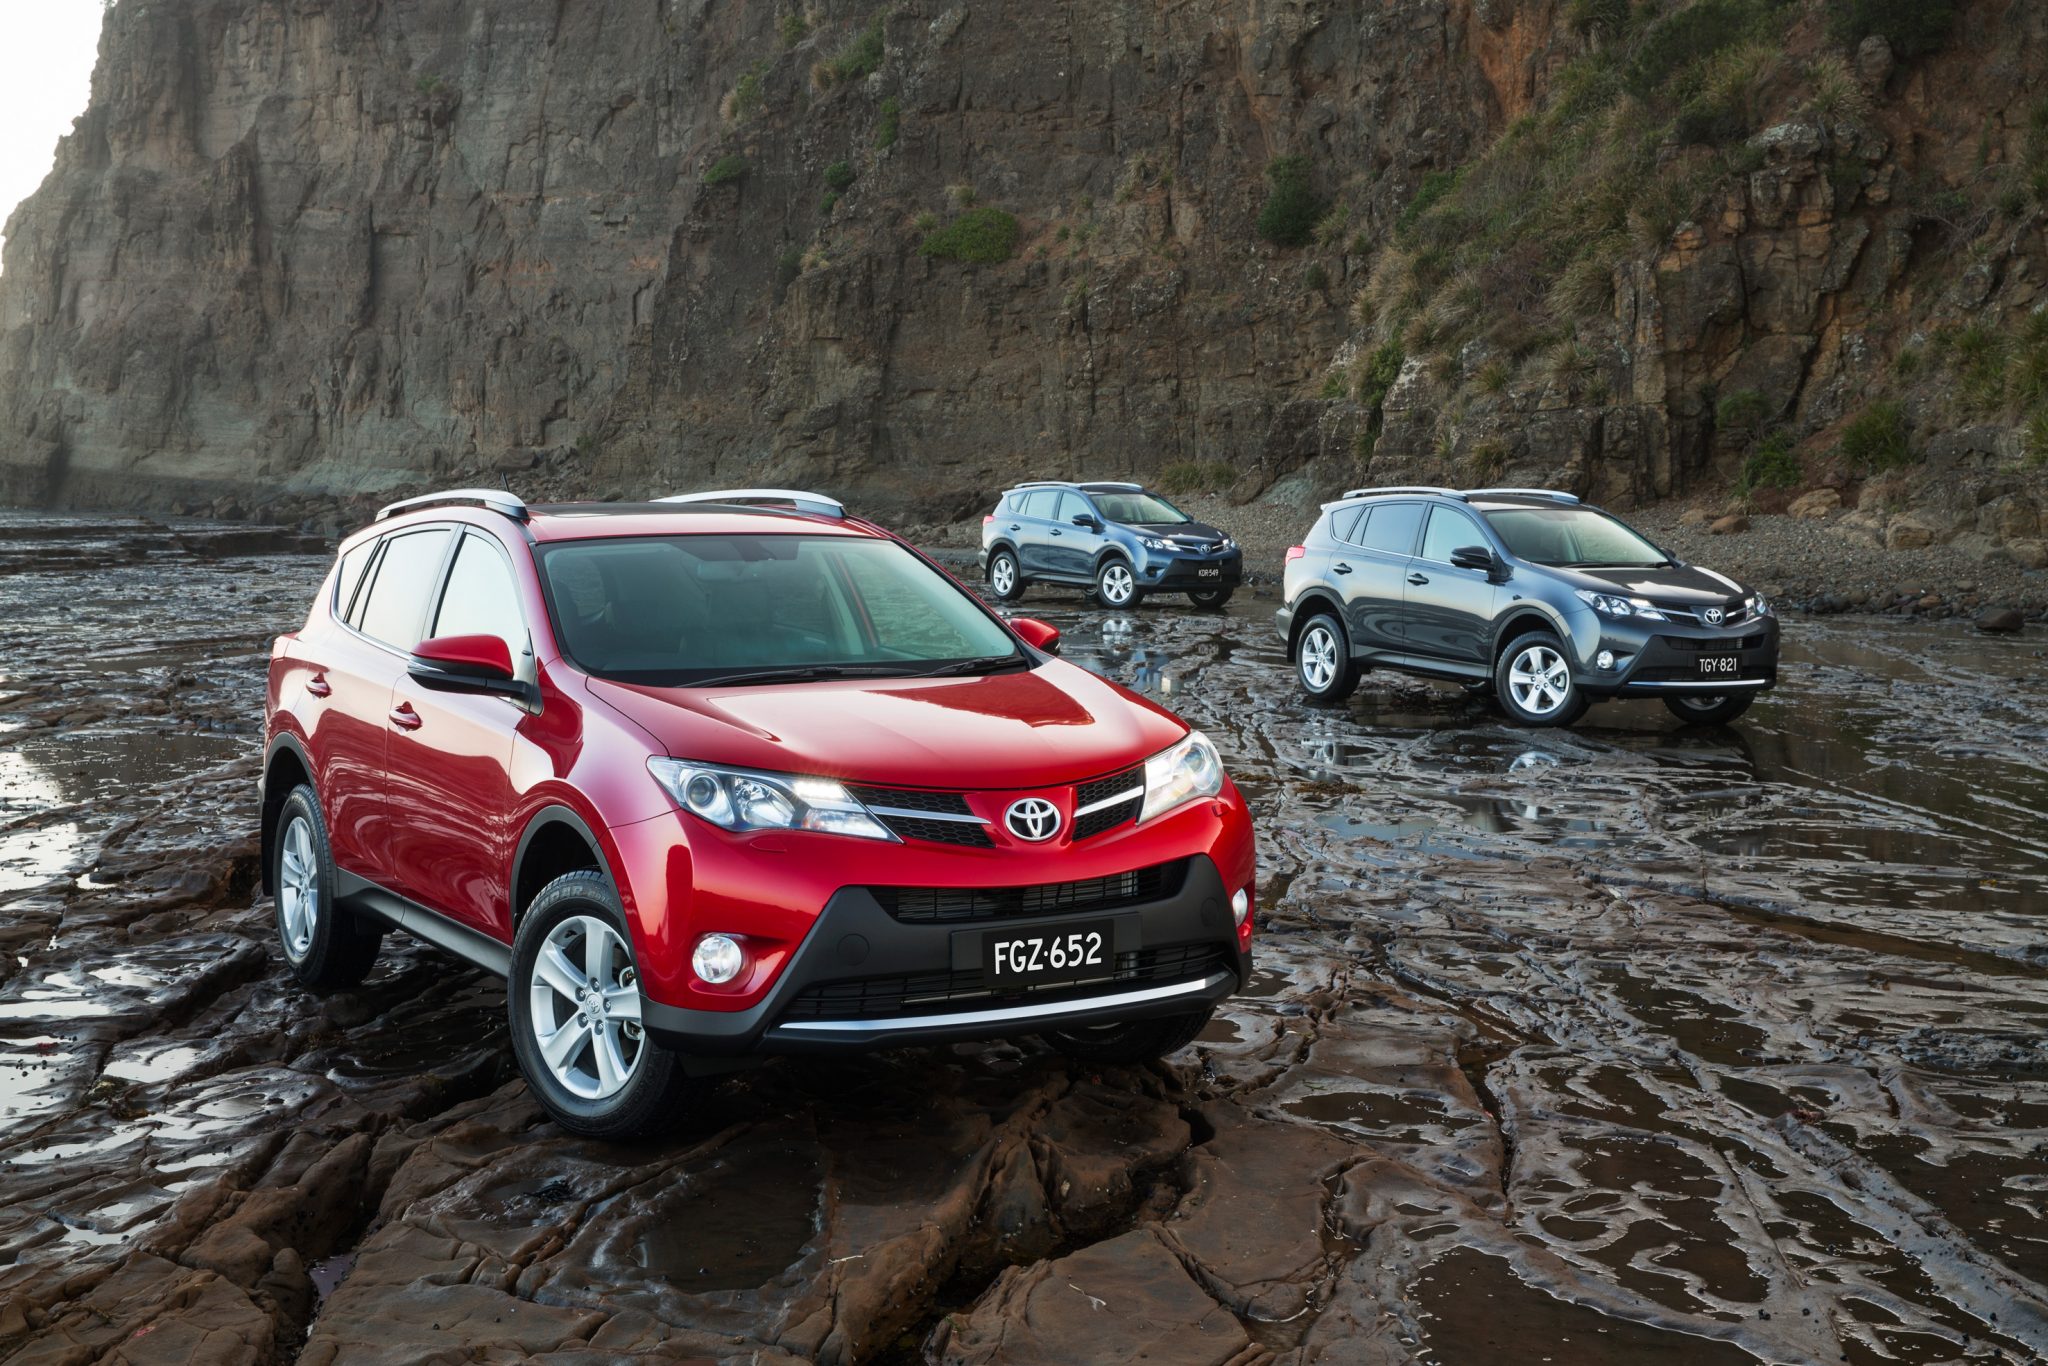 Toyota Cars - News: 2013 Toyota RAV4 launched in Australia2048 x 1366